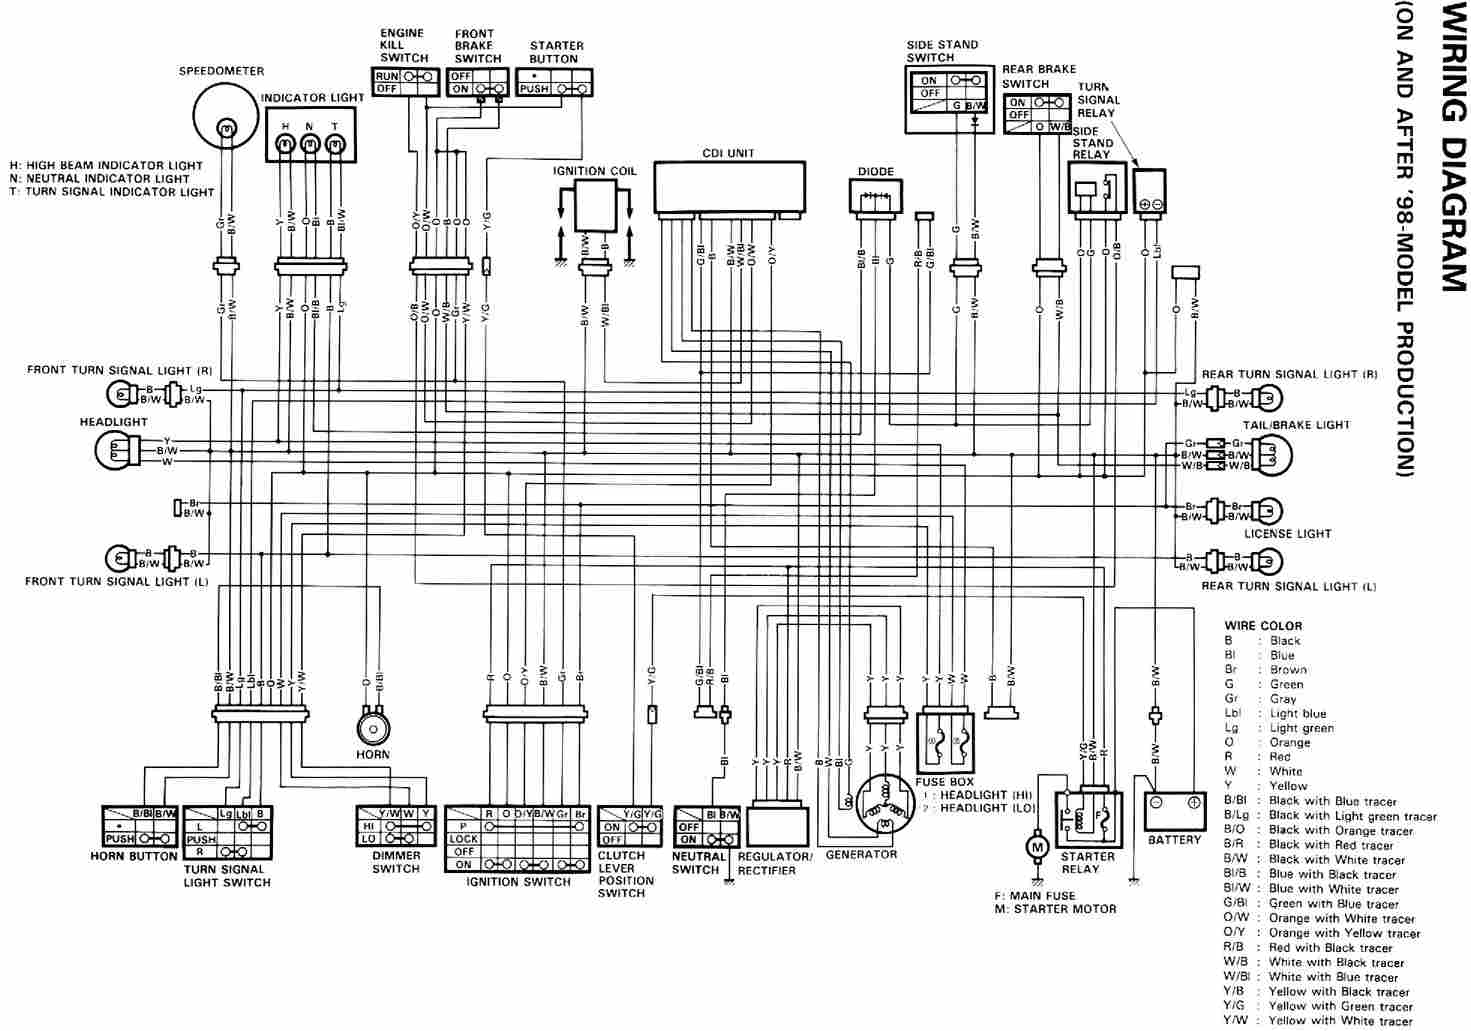 Yamaha Fz6r Flasher Relay Wiring Diagram - Wiring Diagram Schemas